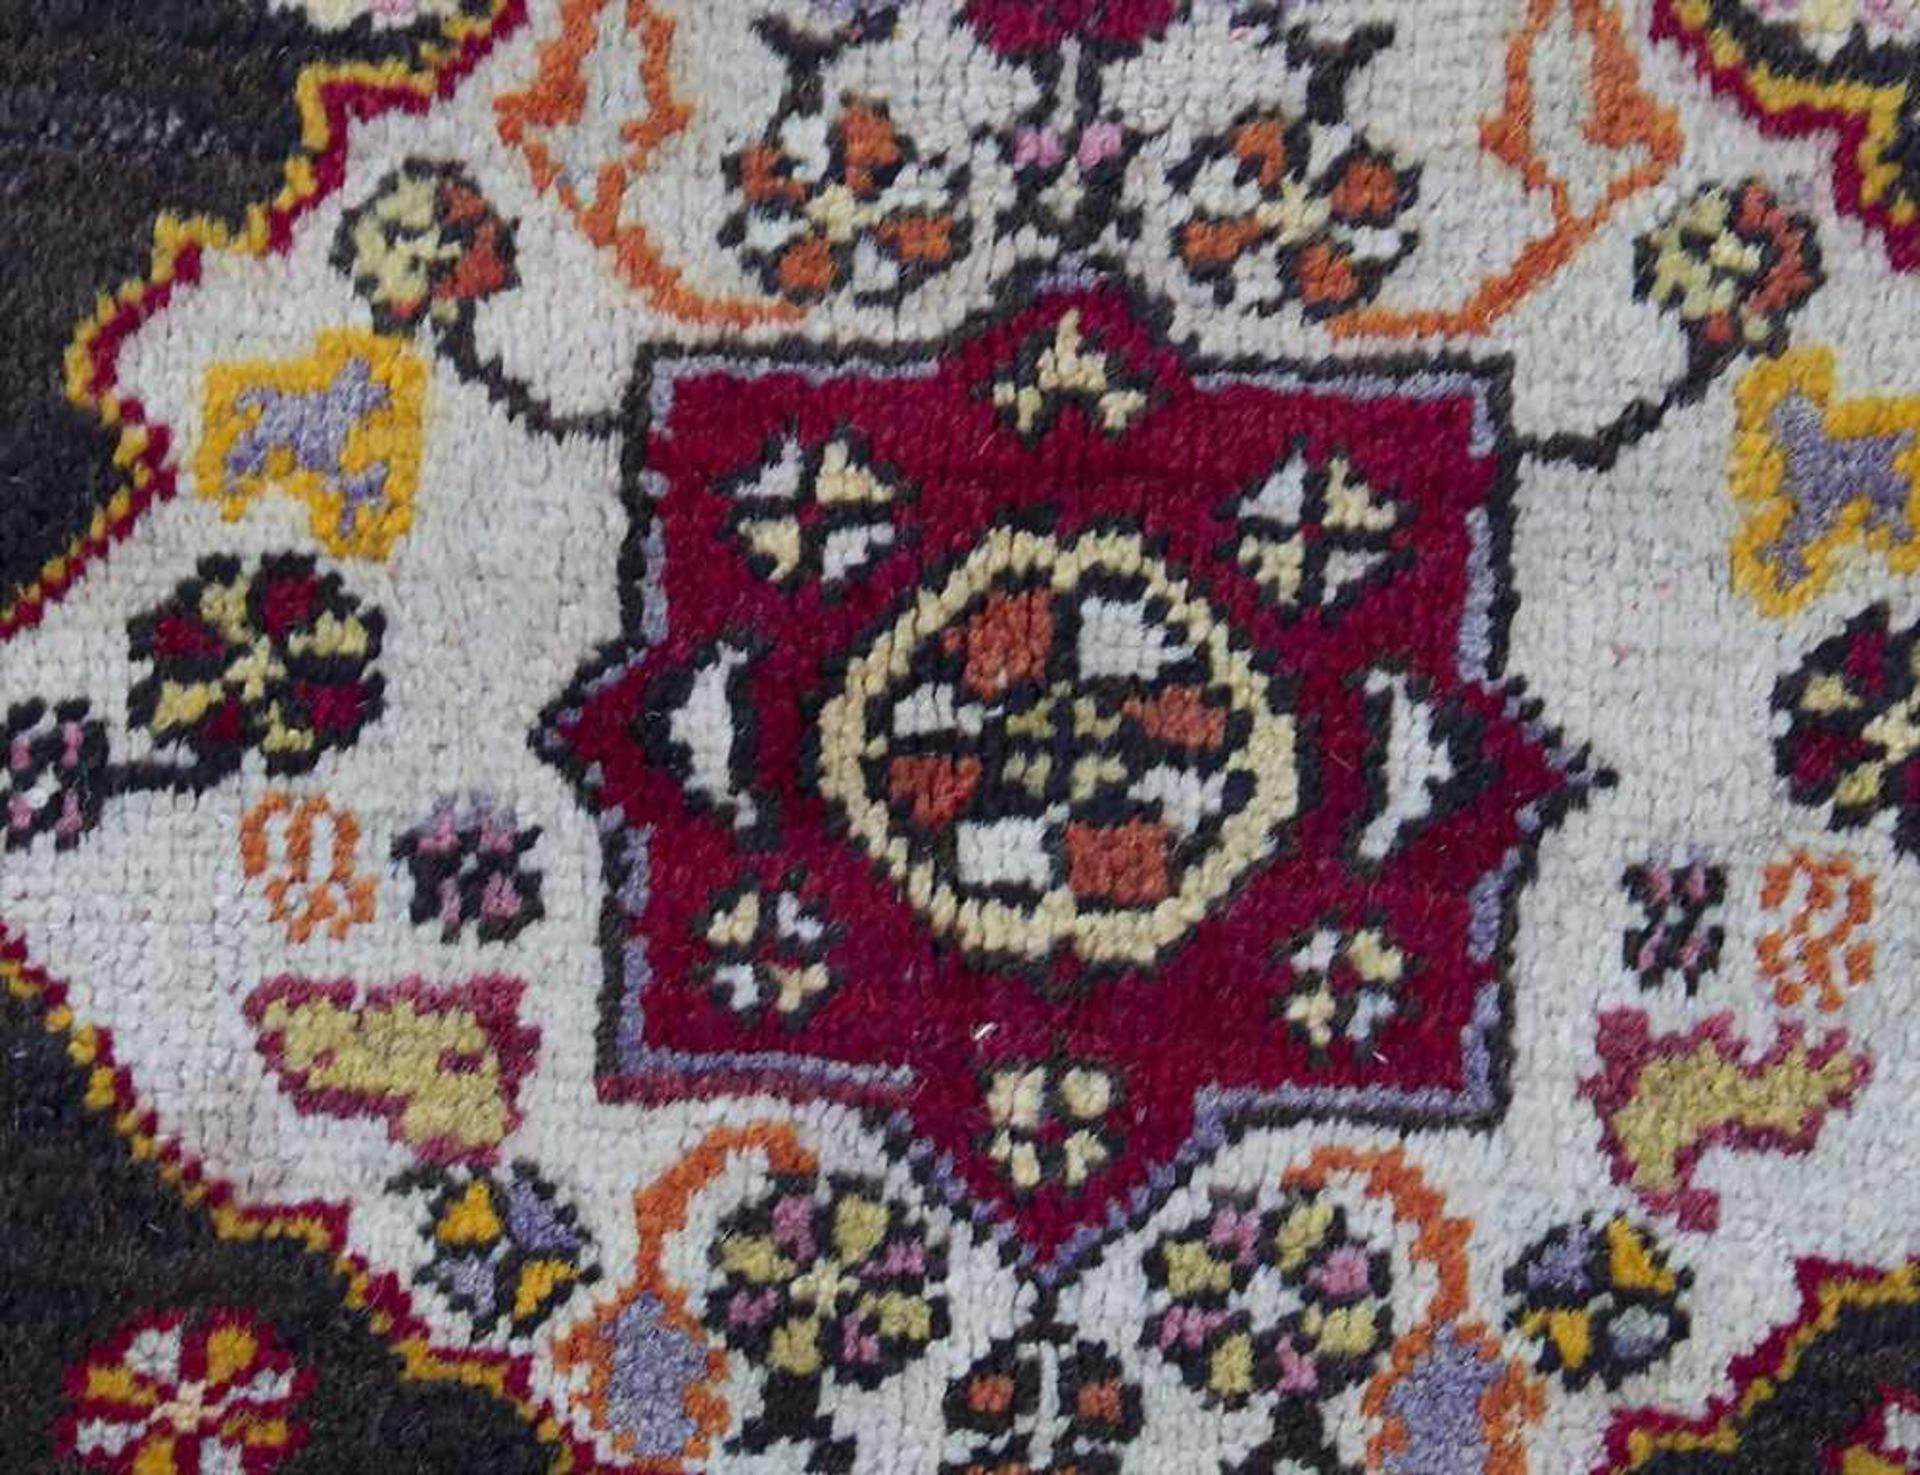 Kaukasischer Teppich / A caucasian carpetMaterial: Wolle auf Wolle, Maße: 80 x 78 cm, Zustand: gut - Image 2 of 7